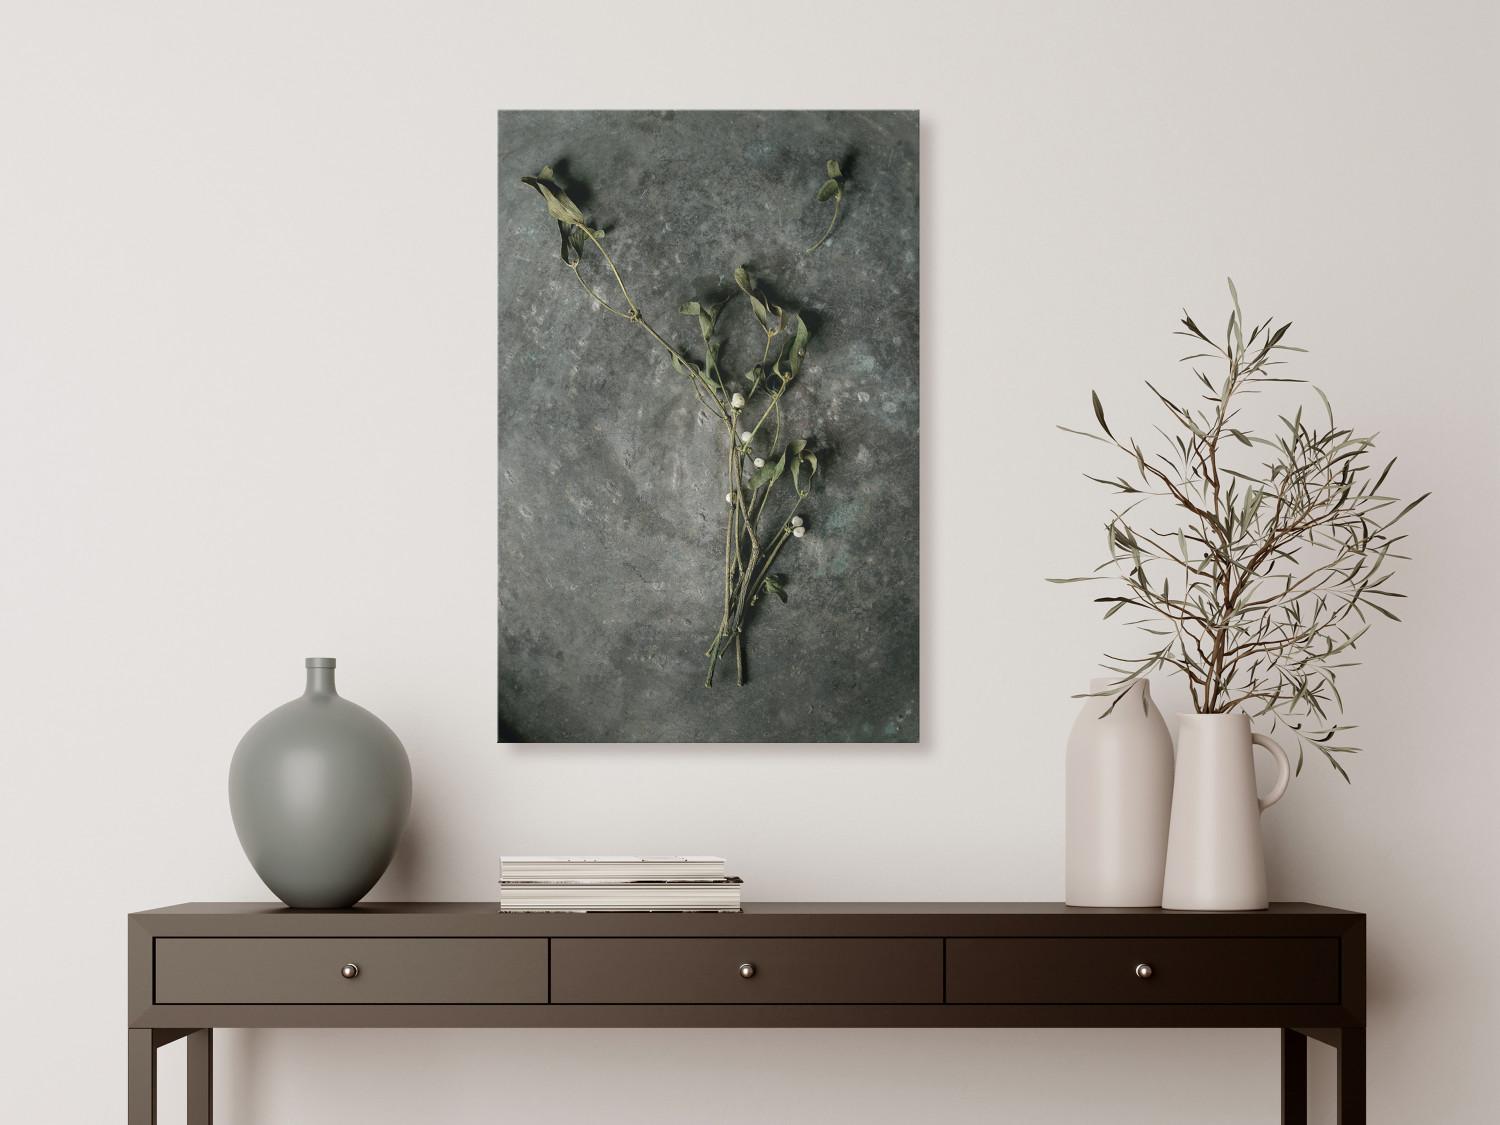 Canvas Dried mistletoe - a winter botanical photograph on a grey stone